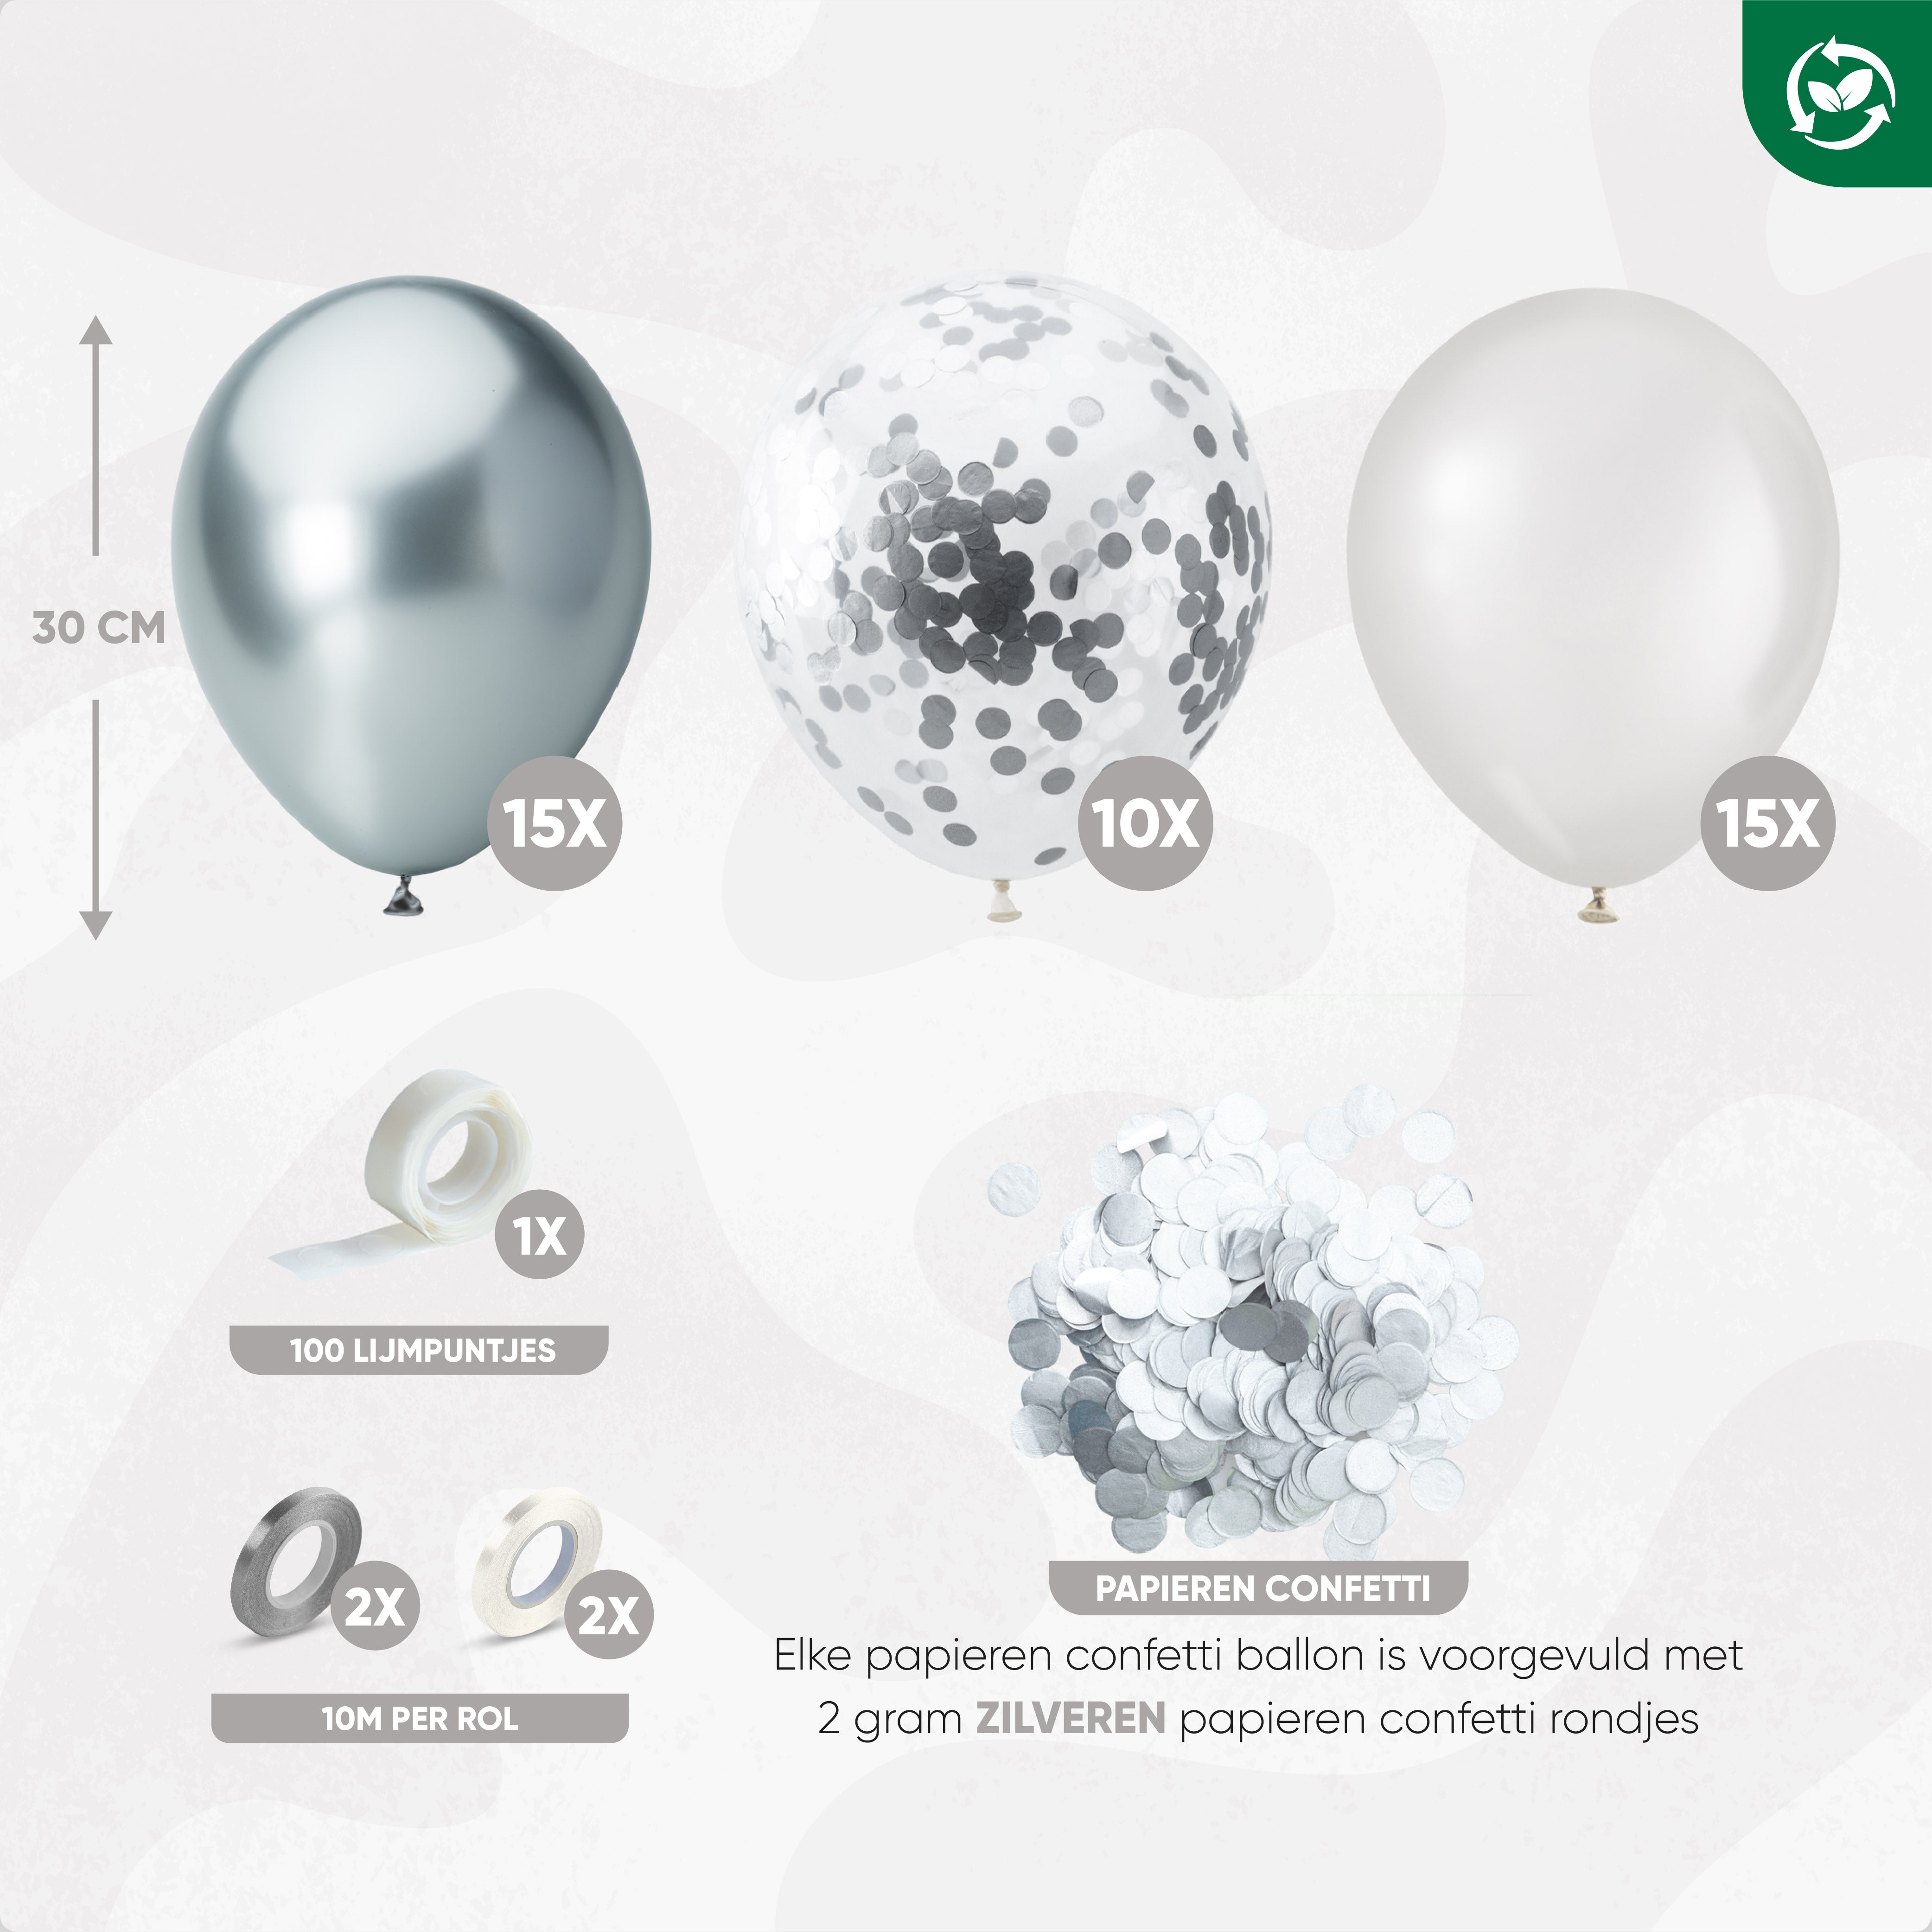 40 Stuks Zilver, Wit & Zilveren Confetti Ballonnen